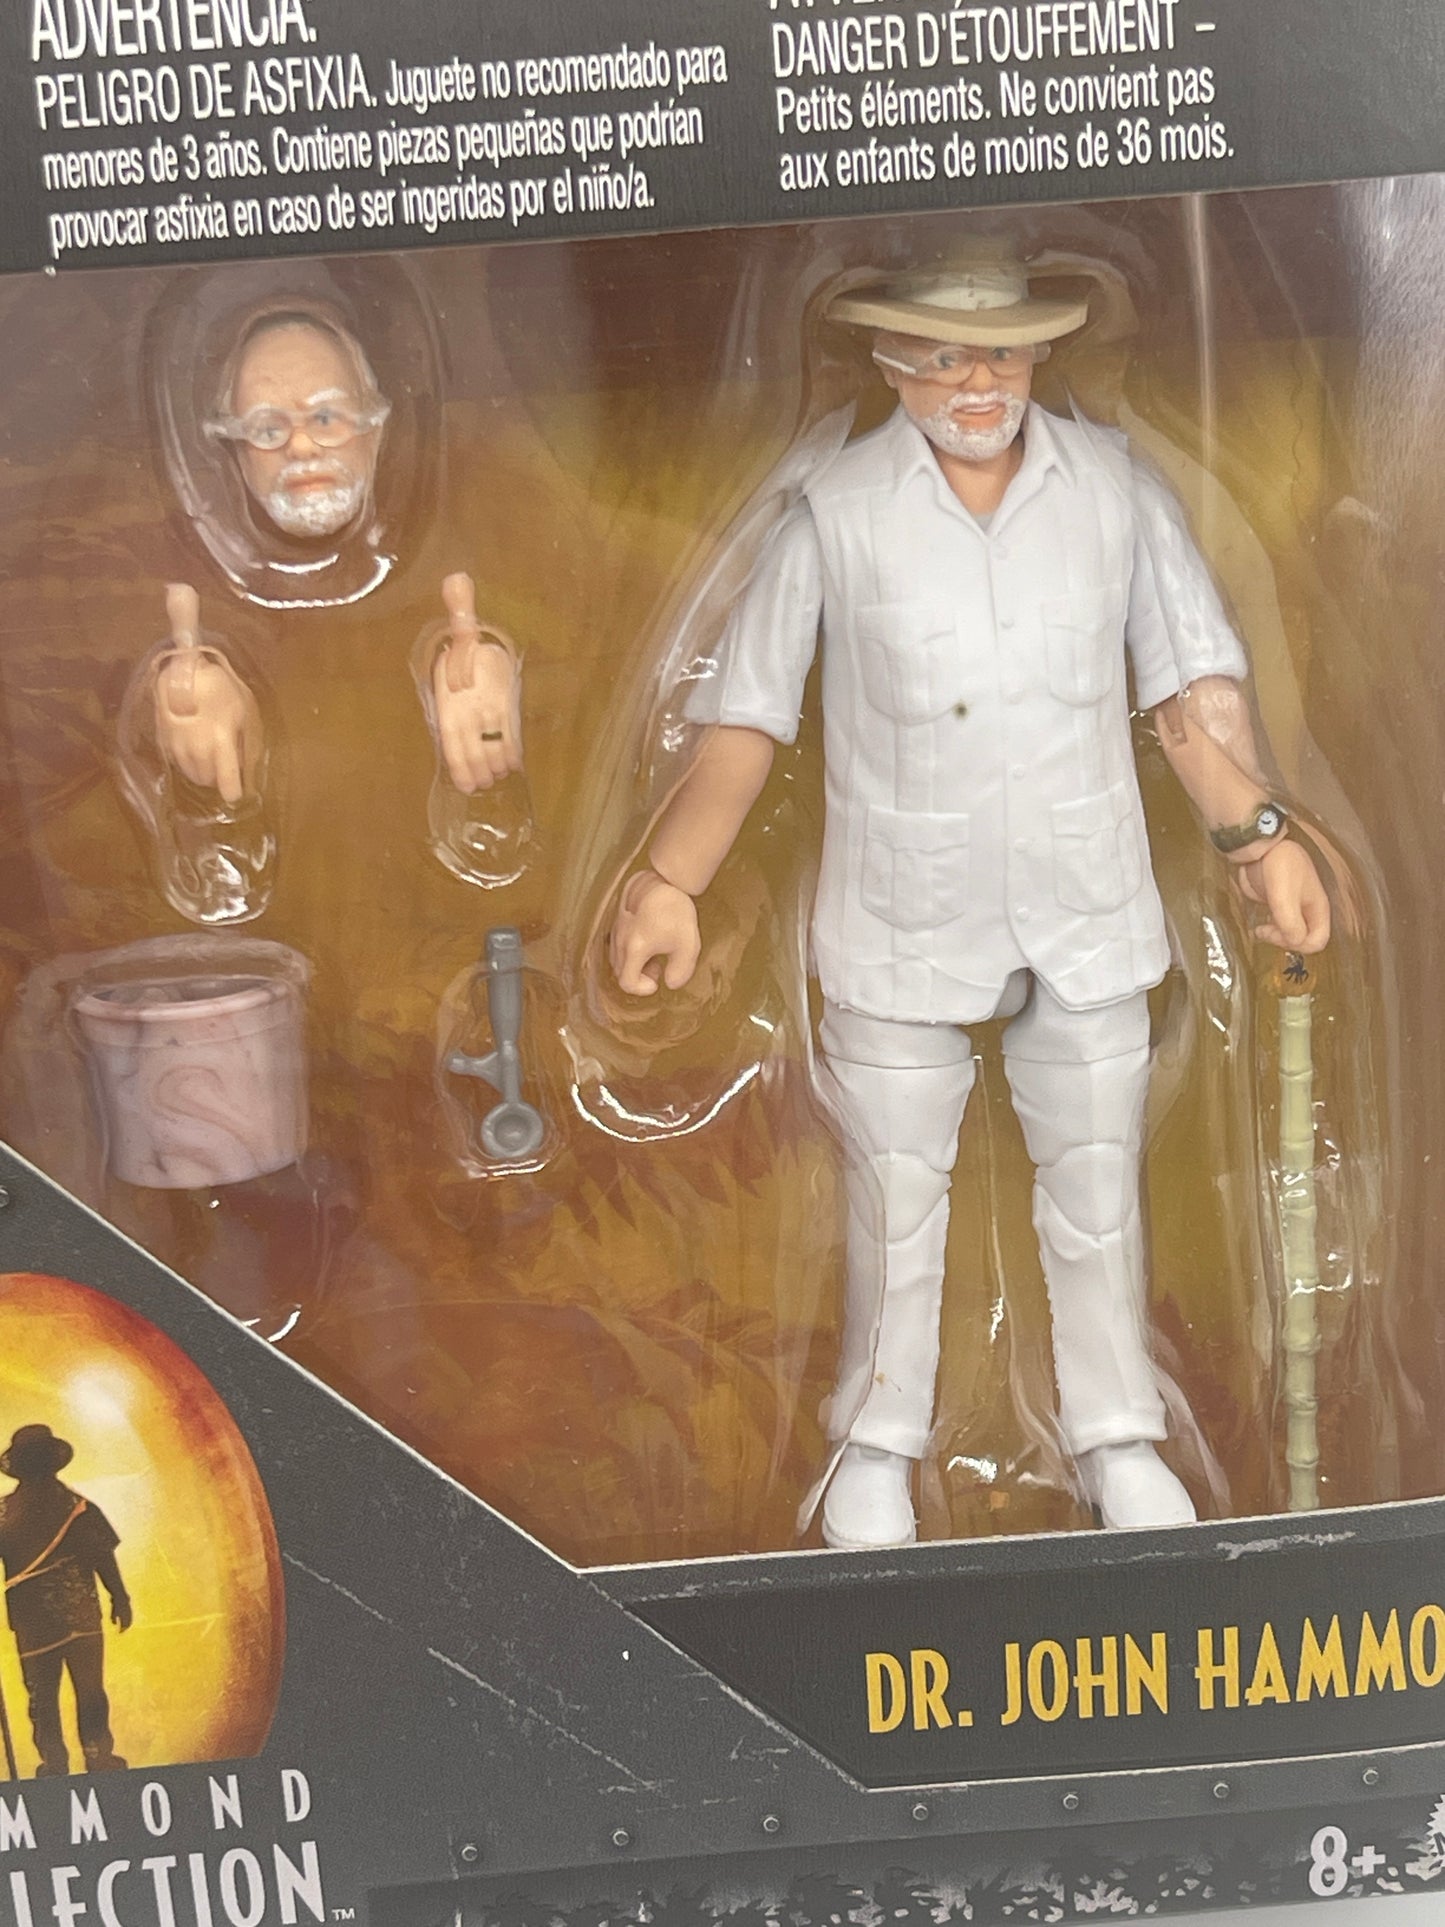 Jurassic Park Hammond Collection "Dr. John Hammond" 30th Anniversary (2023)